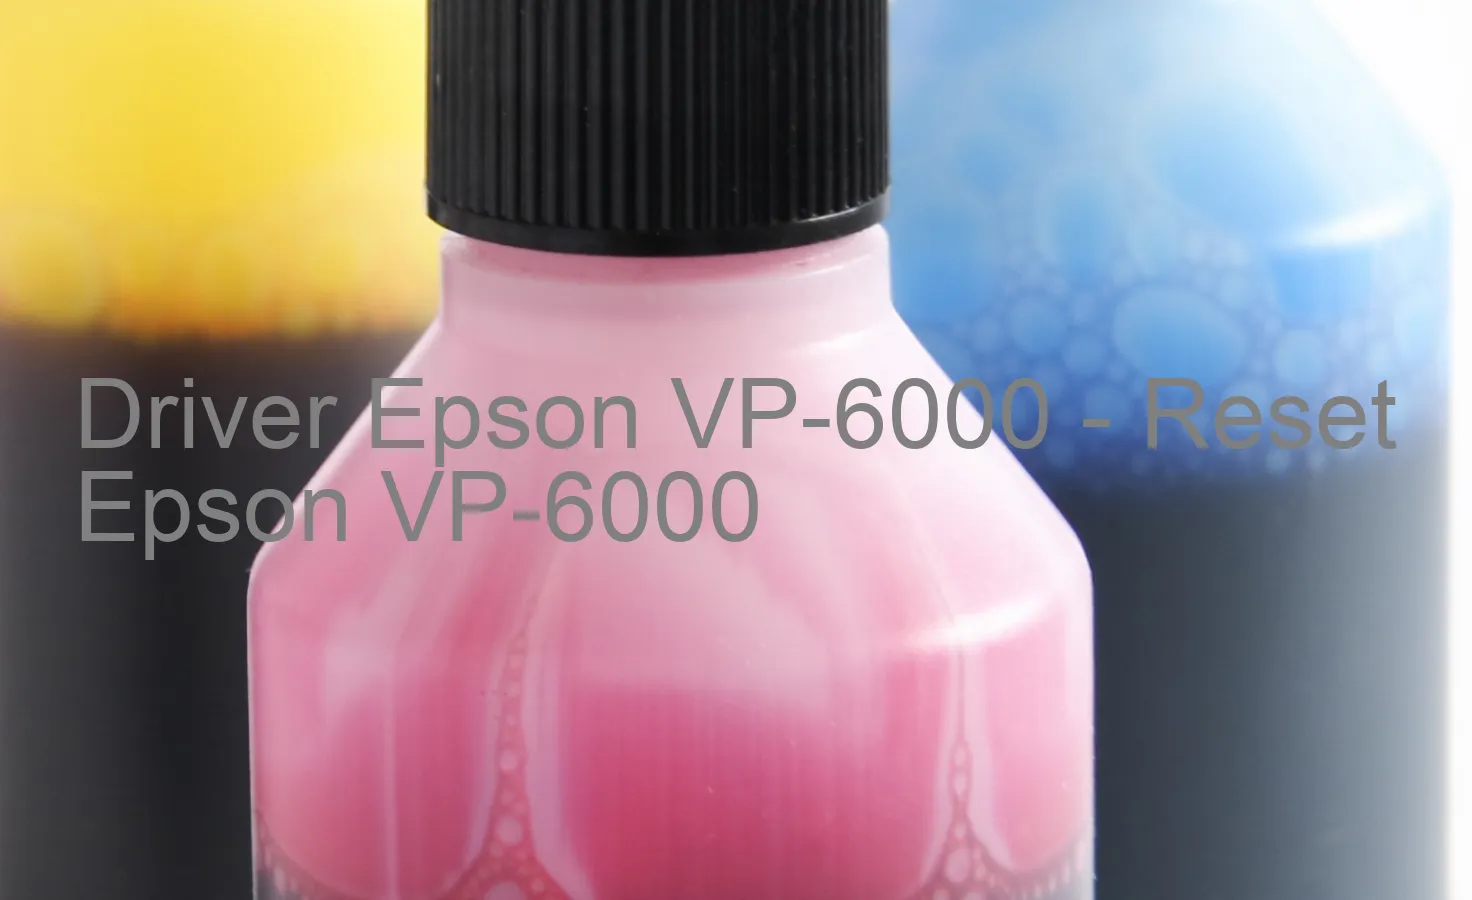 Epson VP-6000のドライバー、Epson VP-6000のリセットソフトウェア